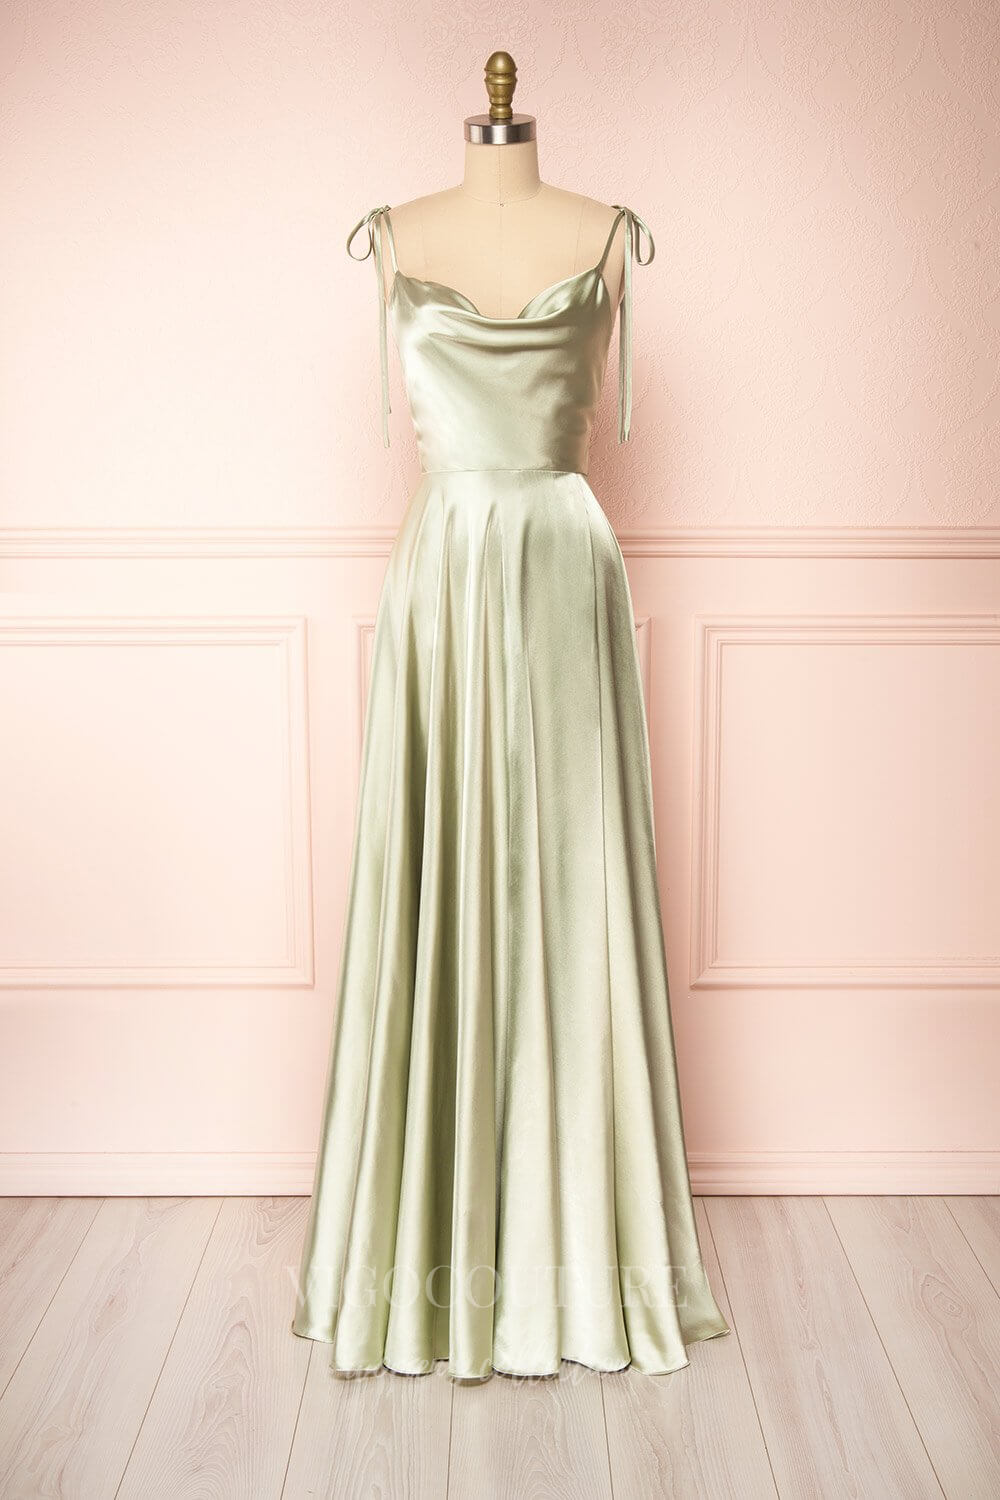 vigocouture-Blush Spaghetti Strap Prom Dress 20575-Prom Dresses-vigocouture-Sage-US2-